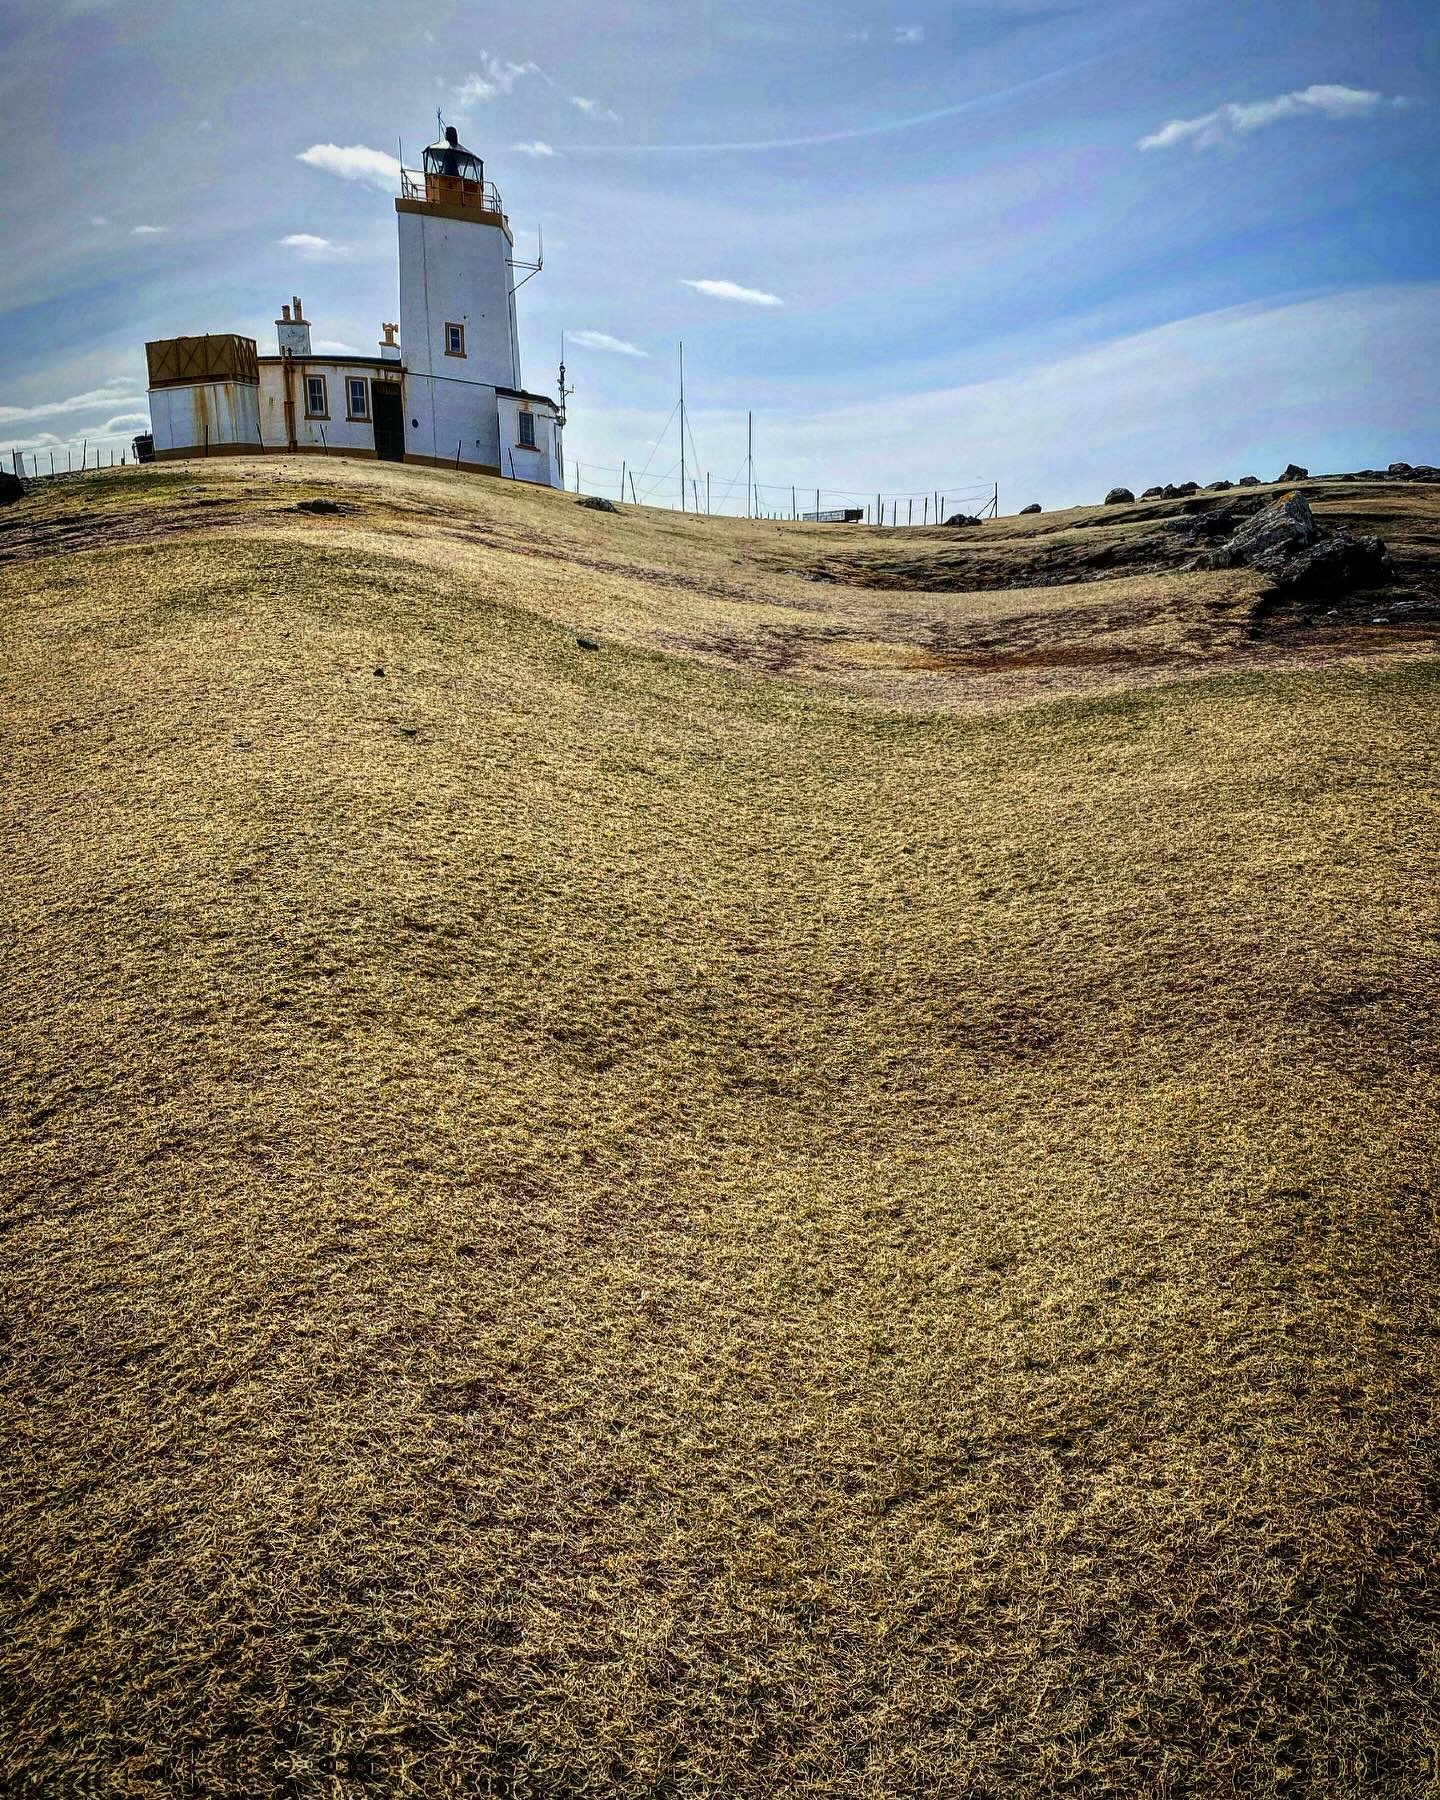 The Lighthouse. #padeapix #lighthouse #eshanesslighthouse #eshaness #northmavine #shetland #northernisles